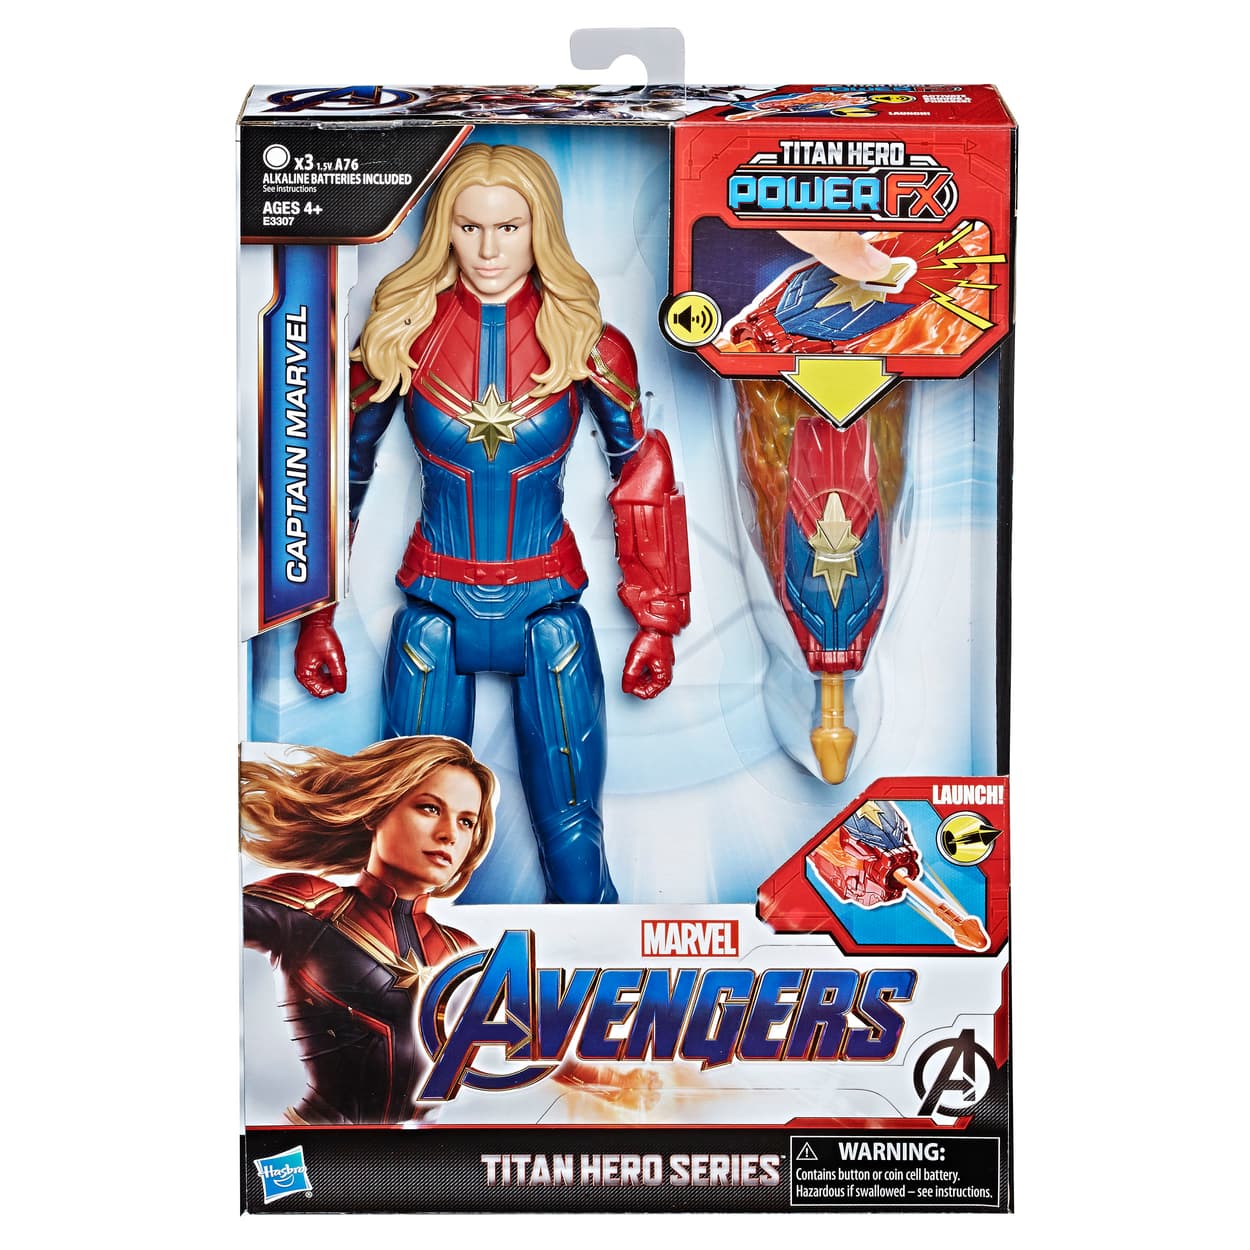 Marvel Avengers Endgame TITAN Hero Thanos Action Figure Hasbro Toy 12in for sale online 